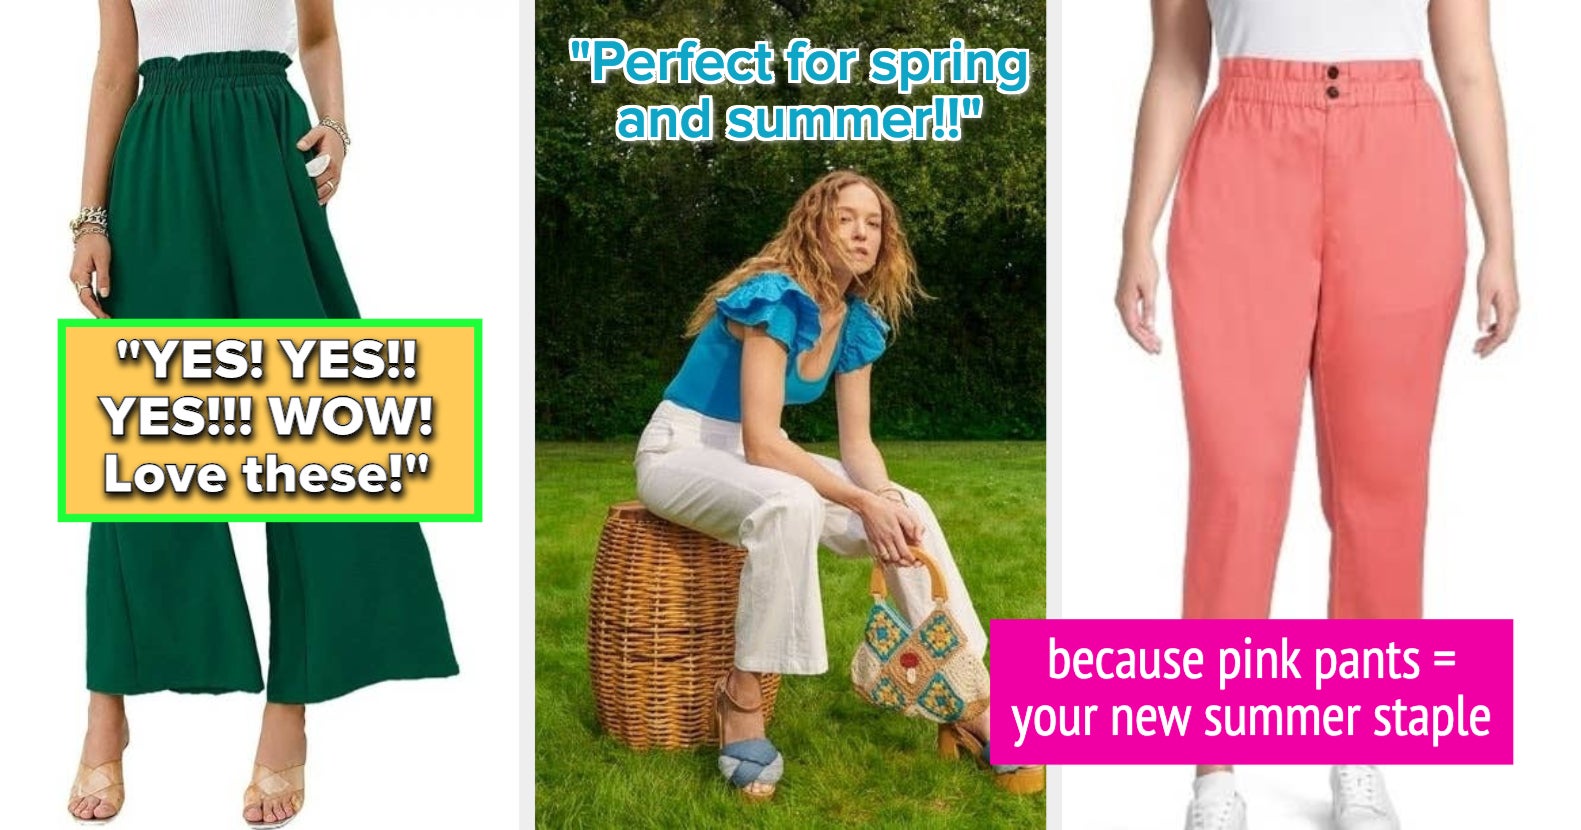 Walmart Outfit Idea - Avia Flare Leggings - Walmart Finds